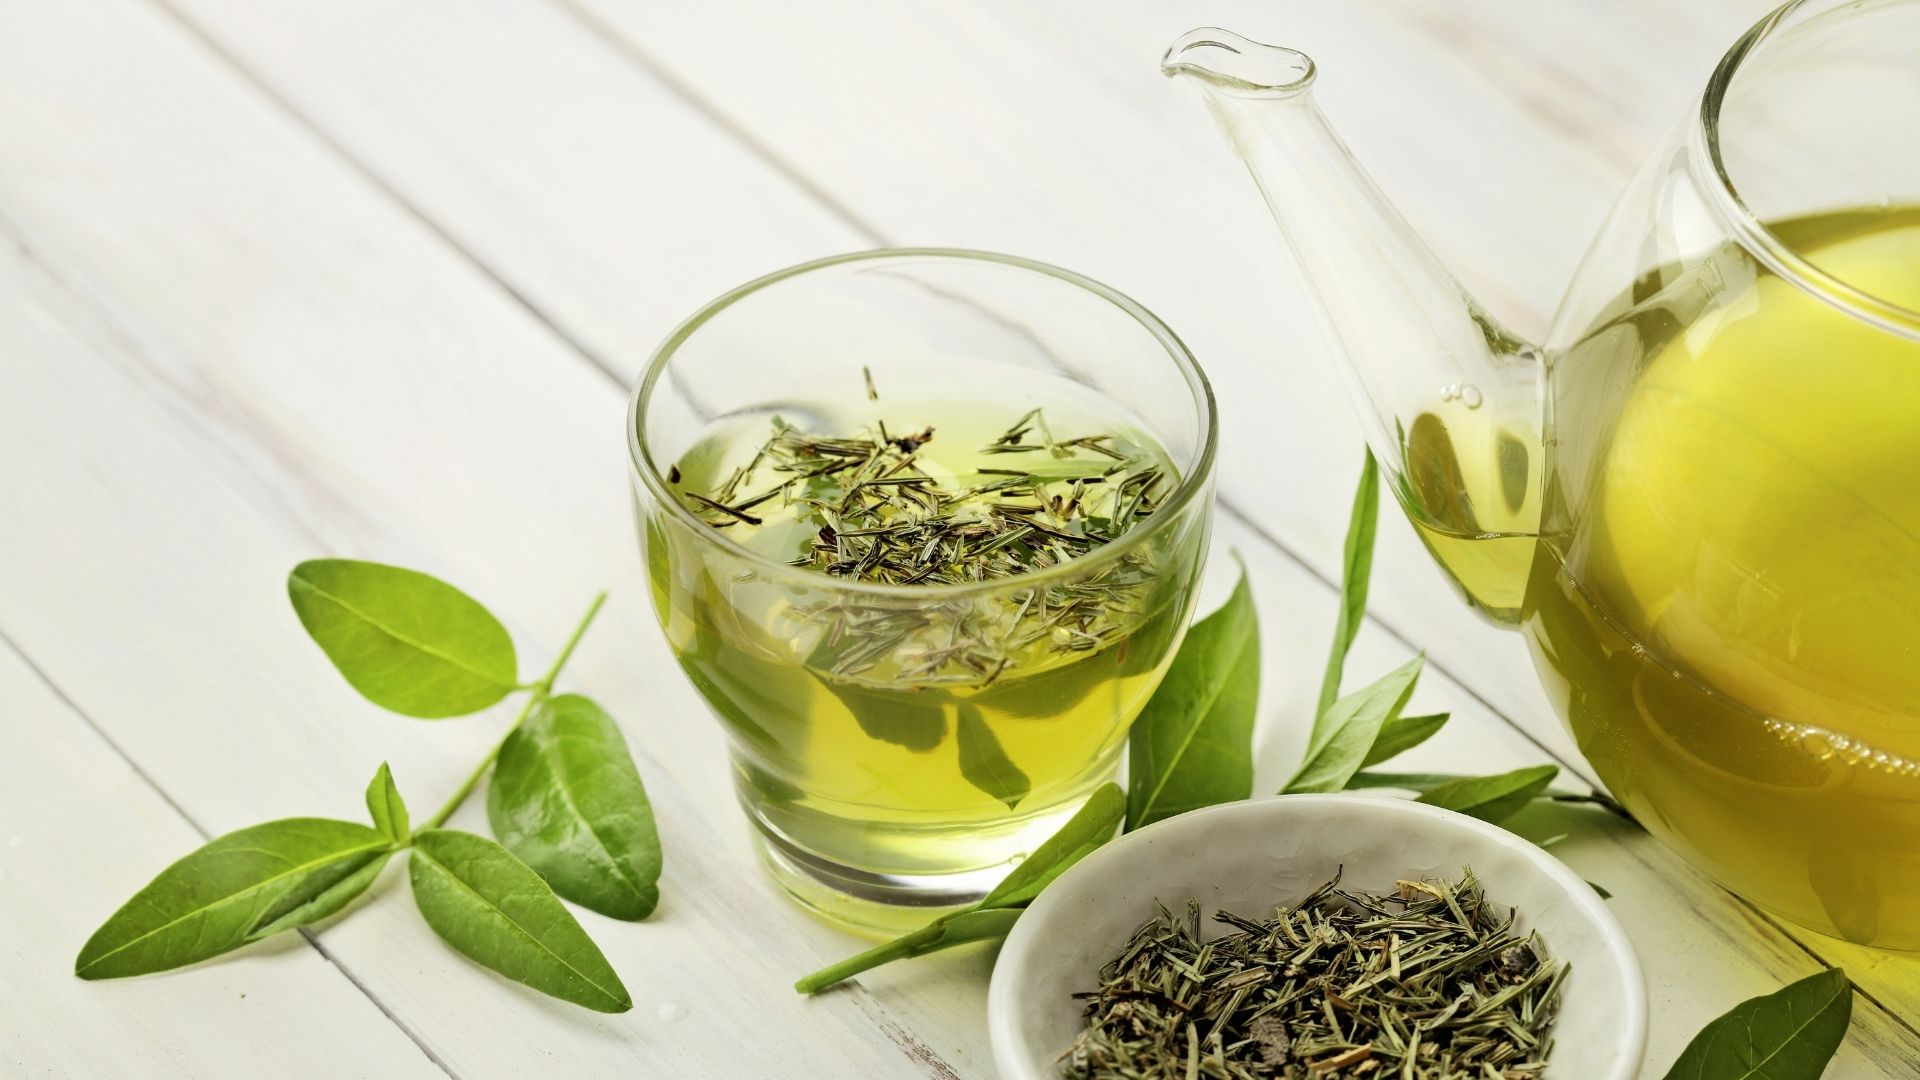 What is green tea benefit